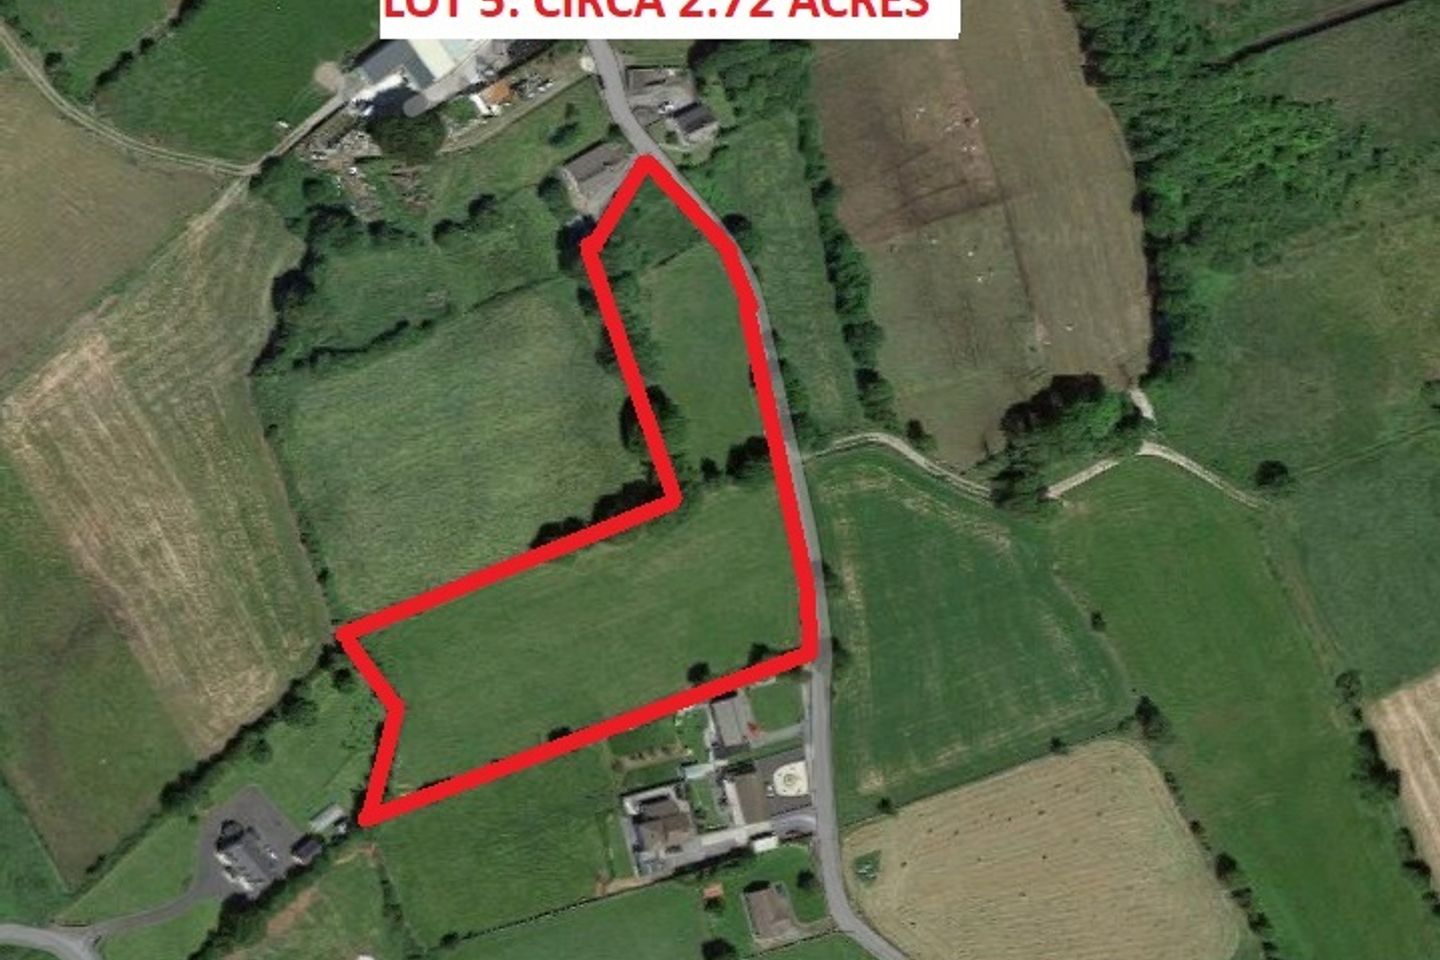 Lot 5- circa 2.22 acres at Mace, Corrandulla, Co. Galway